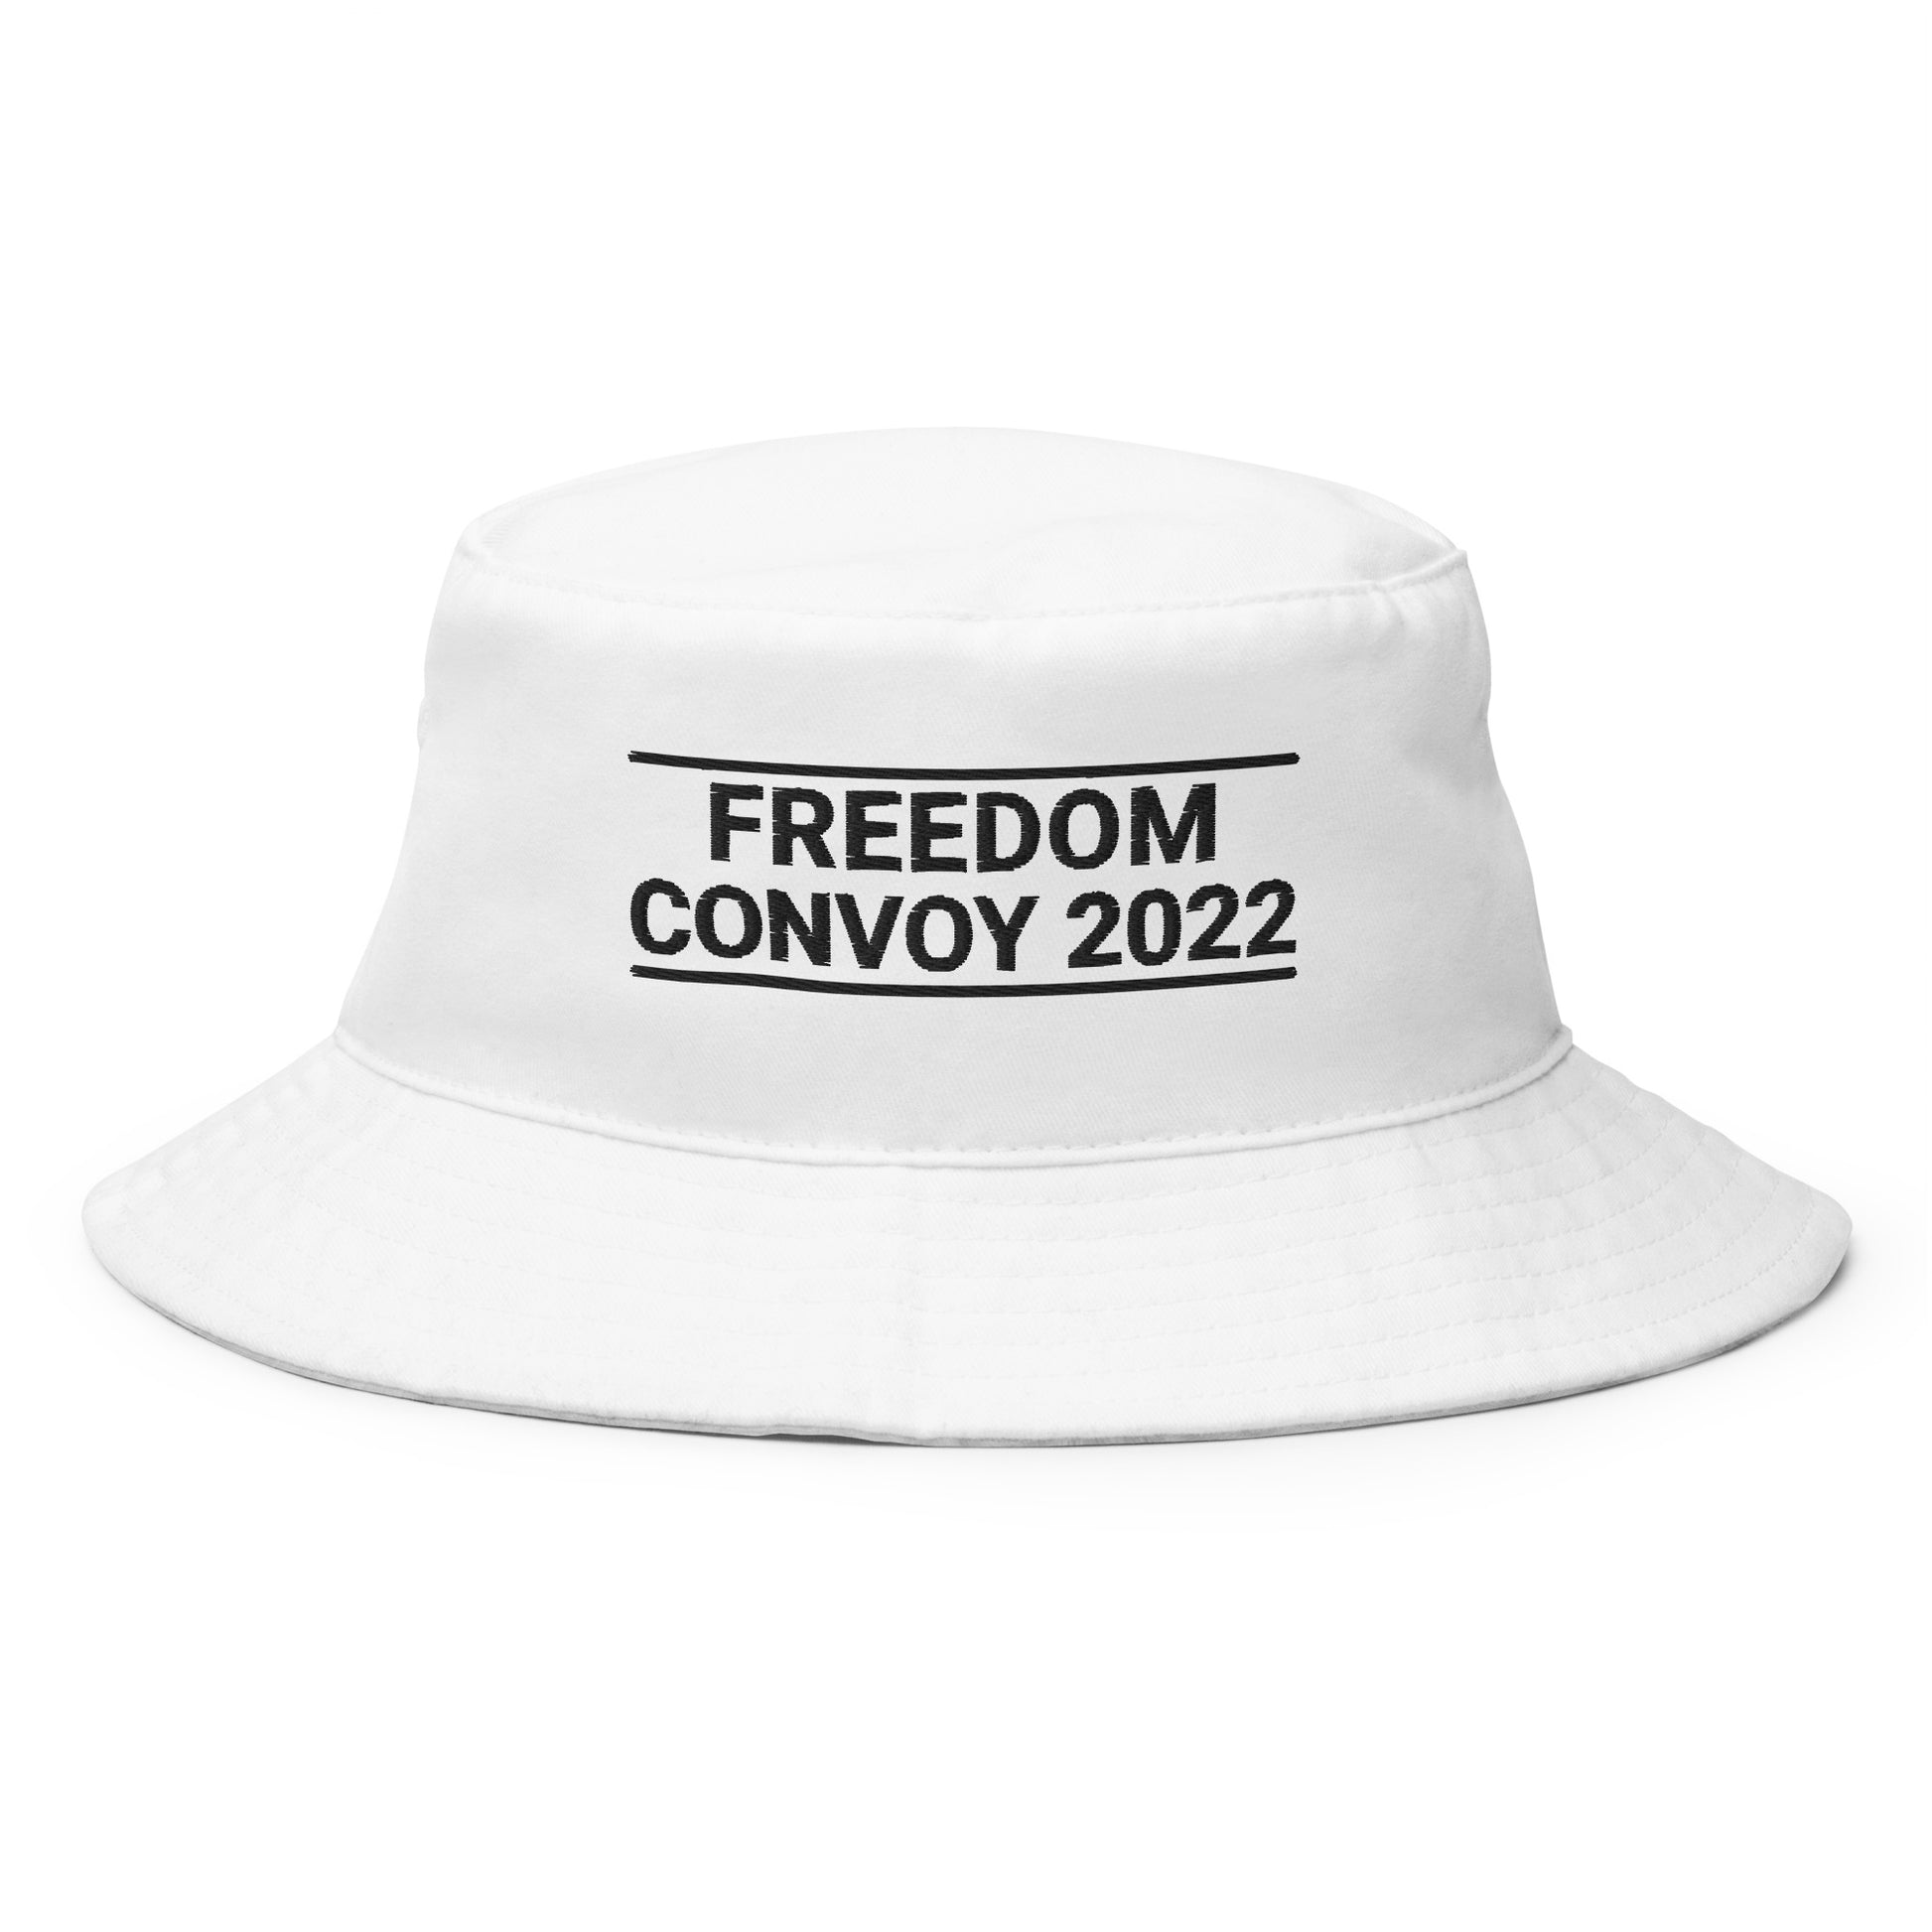 Freedom Convoy 2022 Bucket White Hat.